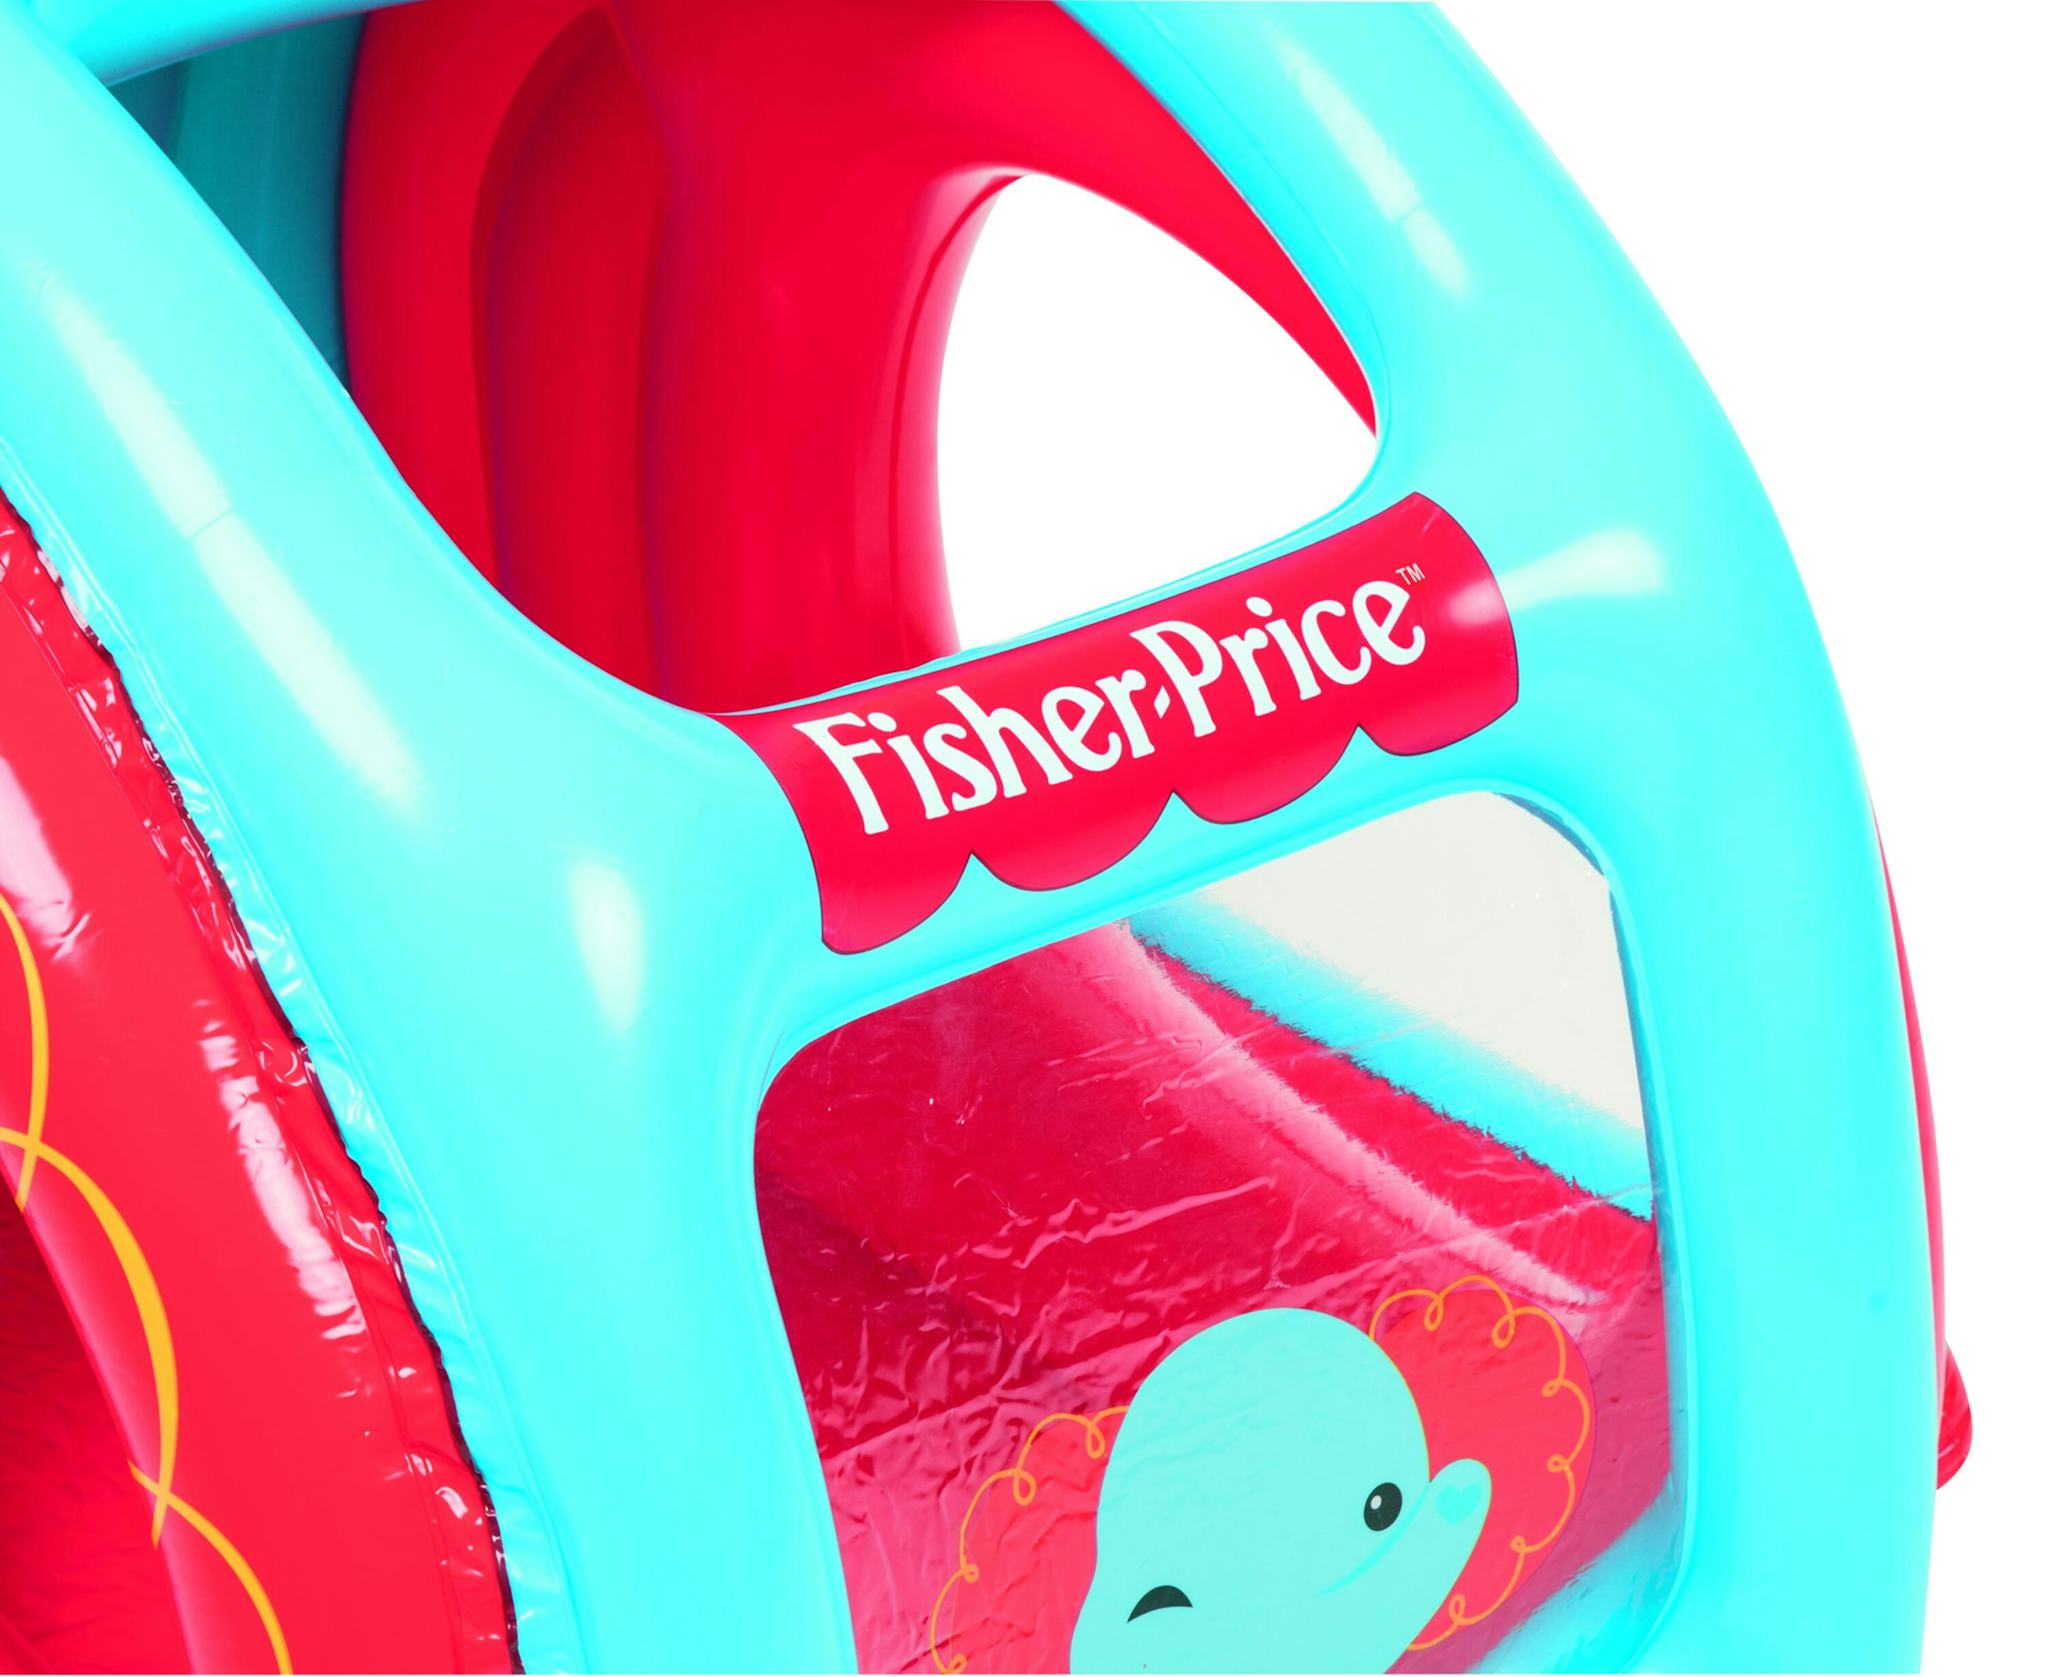 Giochi gonfiabili per bambini Playcenter gonfiabile Elicottero Fisher-Price con palline Bestway 26